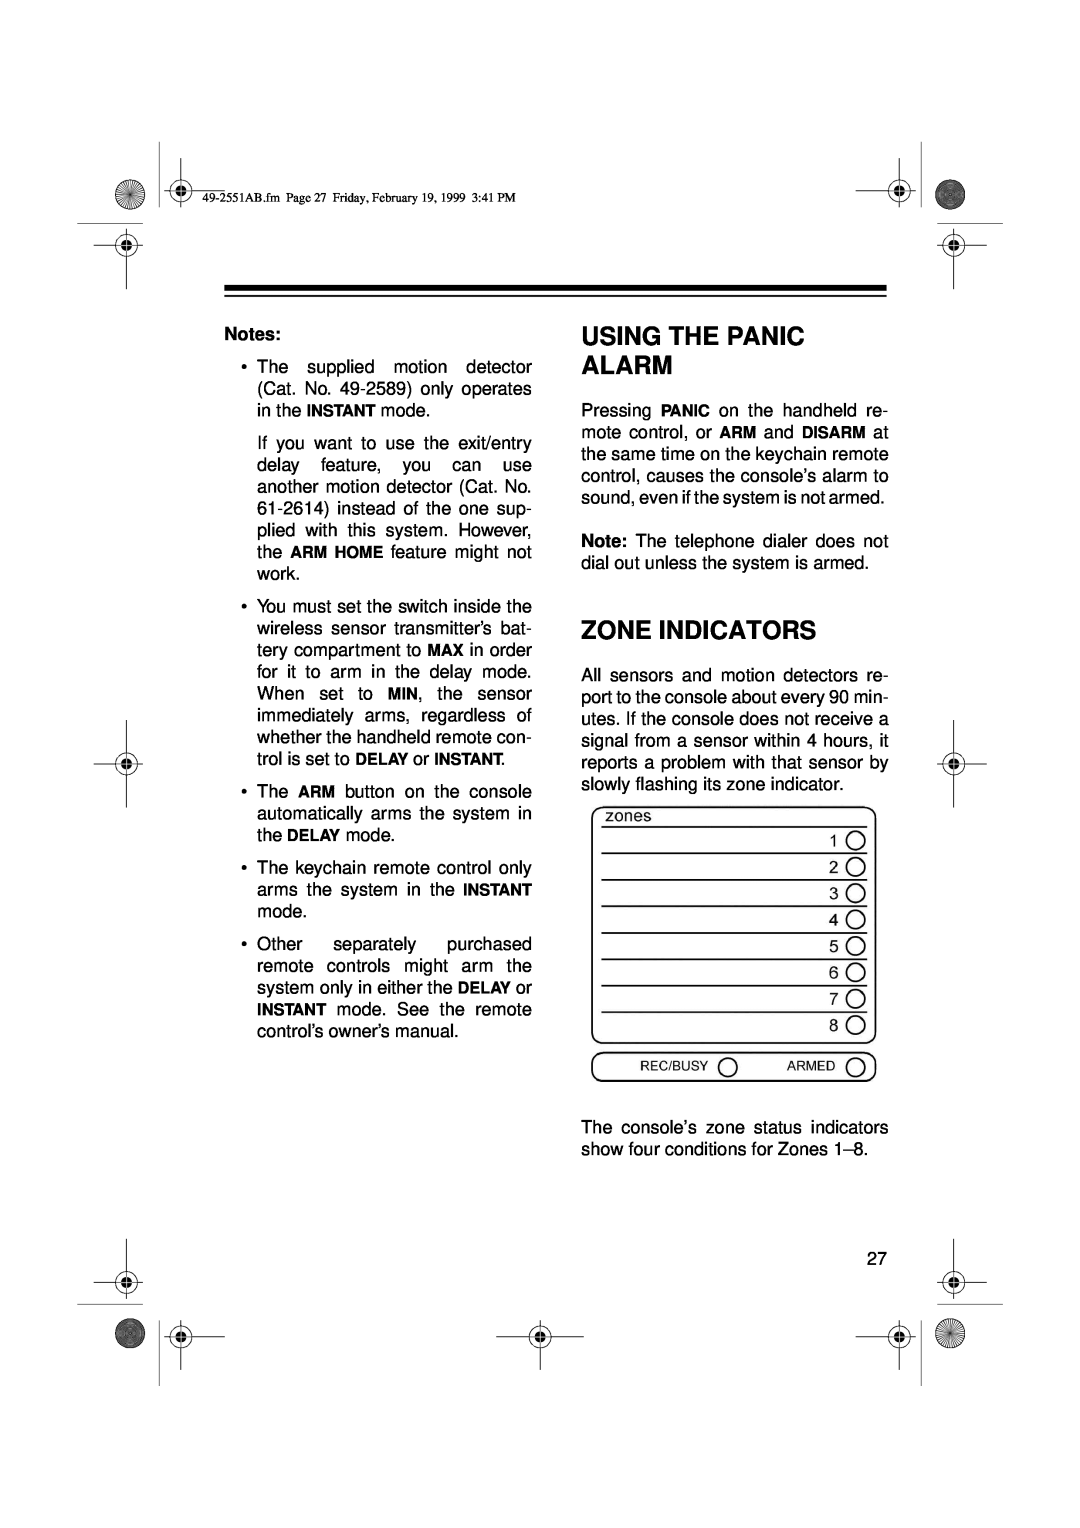 Radio Shack 49-2551A owner manual Using The Panic Alarm, Zone Indicators 